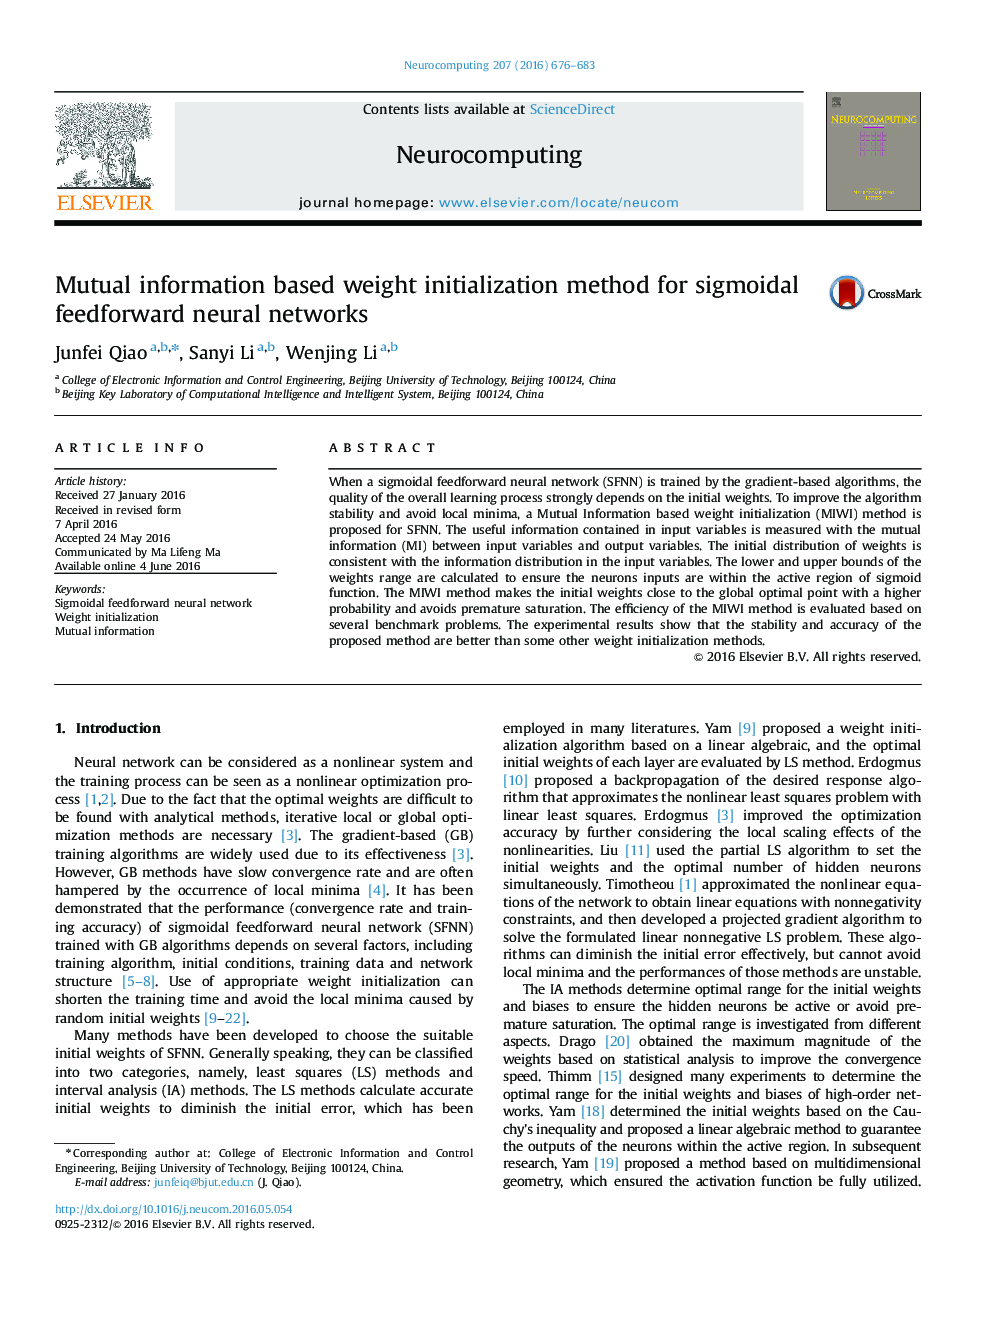 Mutual information based weight initialization method for sigmoidal feedforward neural networks